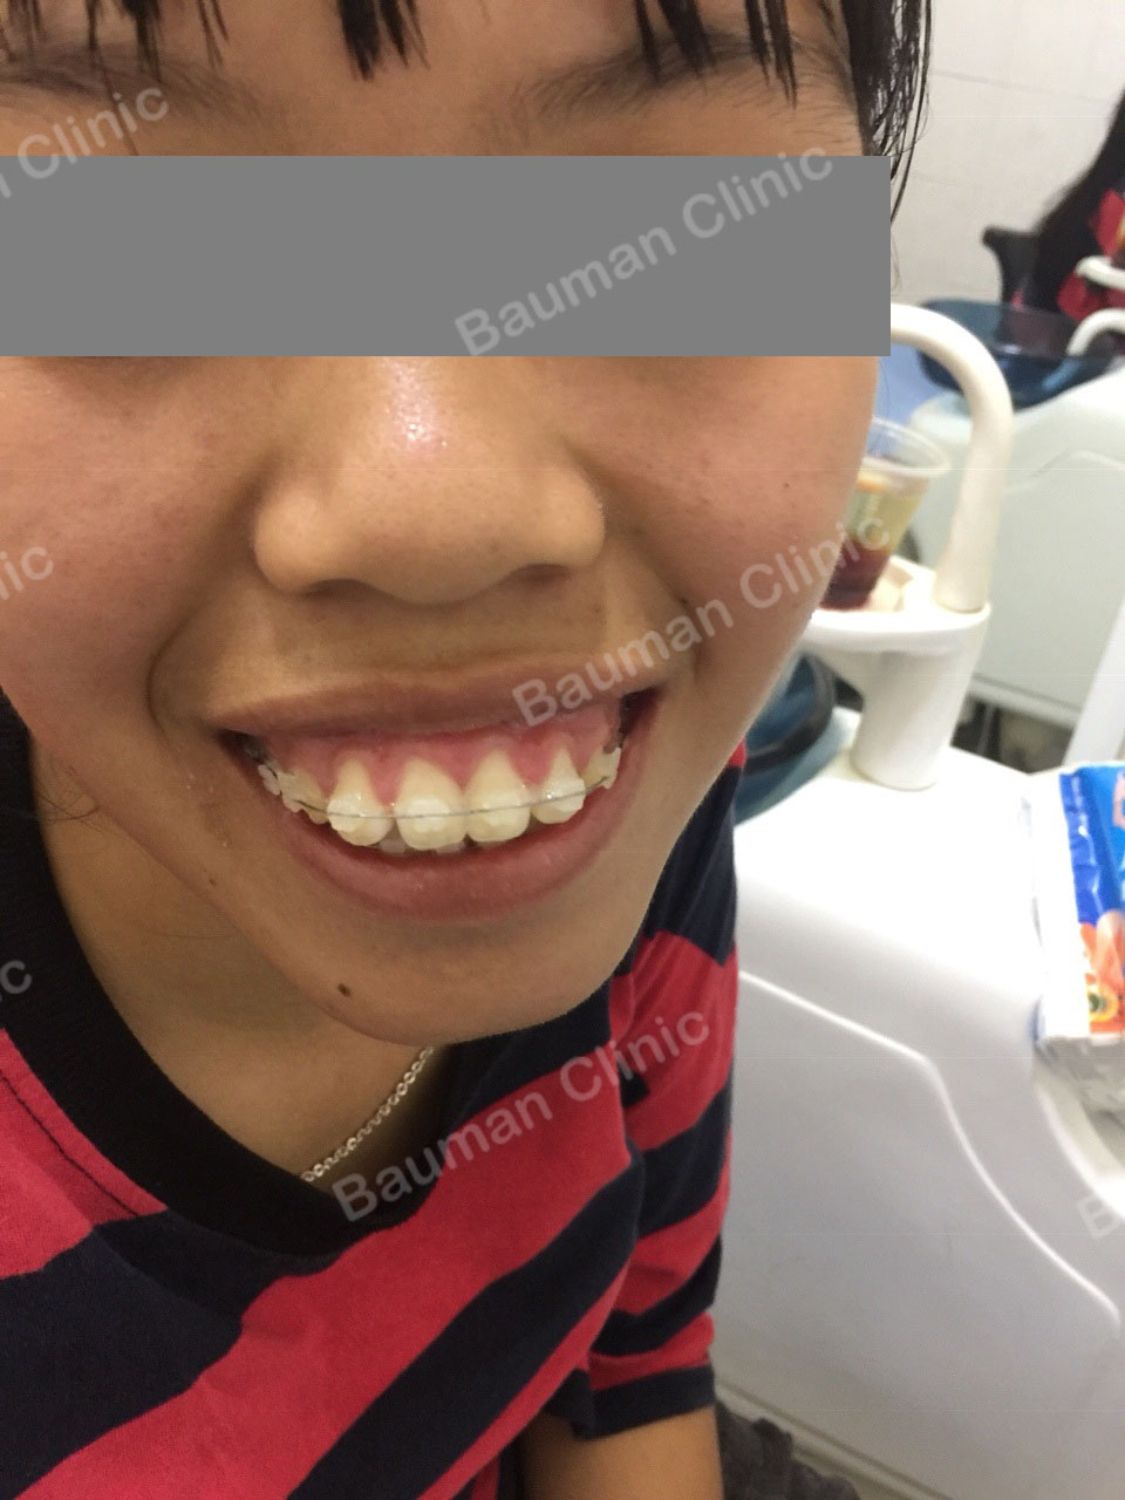 Ca niềng răng số 5030 - Nha khoa Bauman Clinic